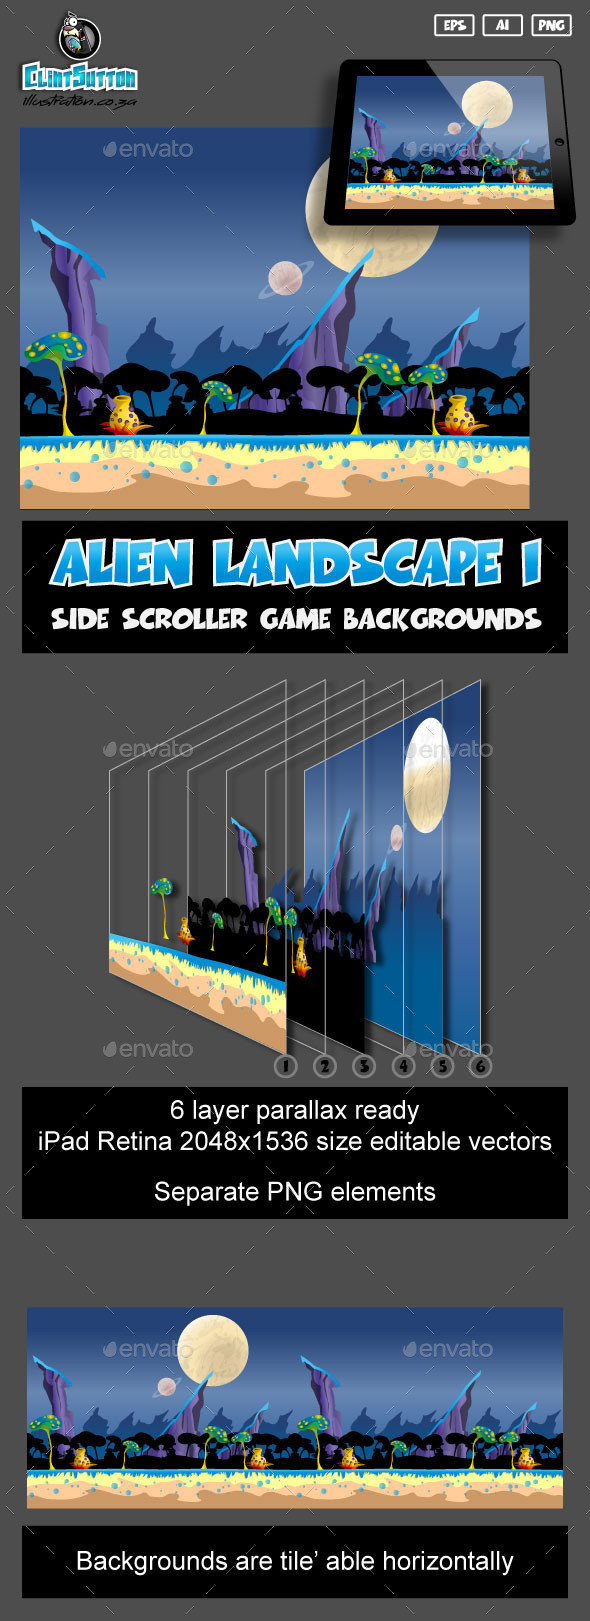 Alienlandscape1 preview